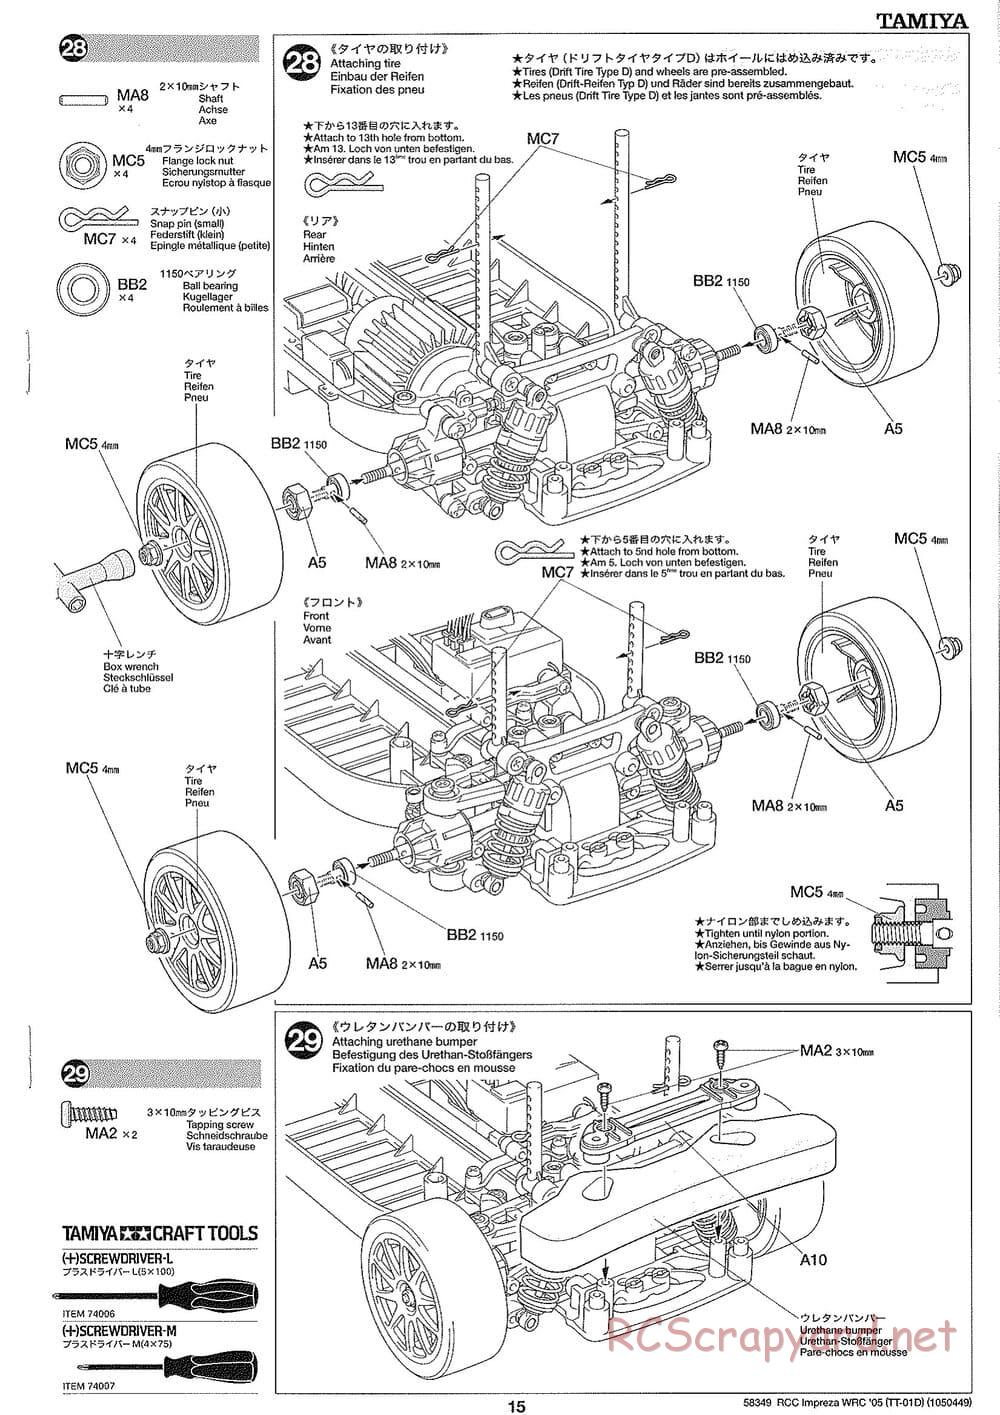 Tamiya - Subaru Impreza WRC Monte Carlo 05 - Drift Spec - TT-01D Chassis - Manual - Page 15